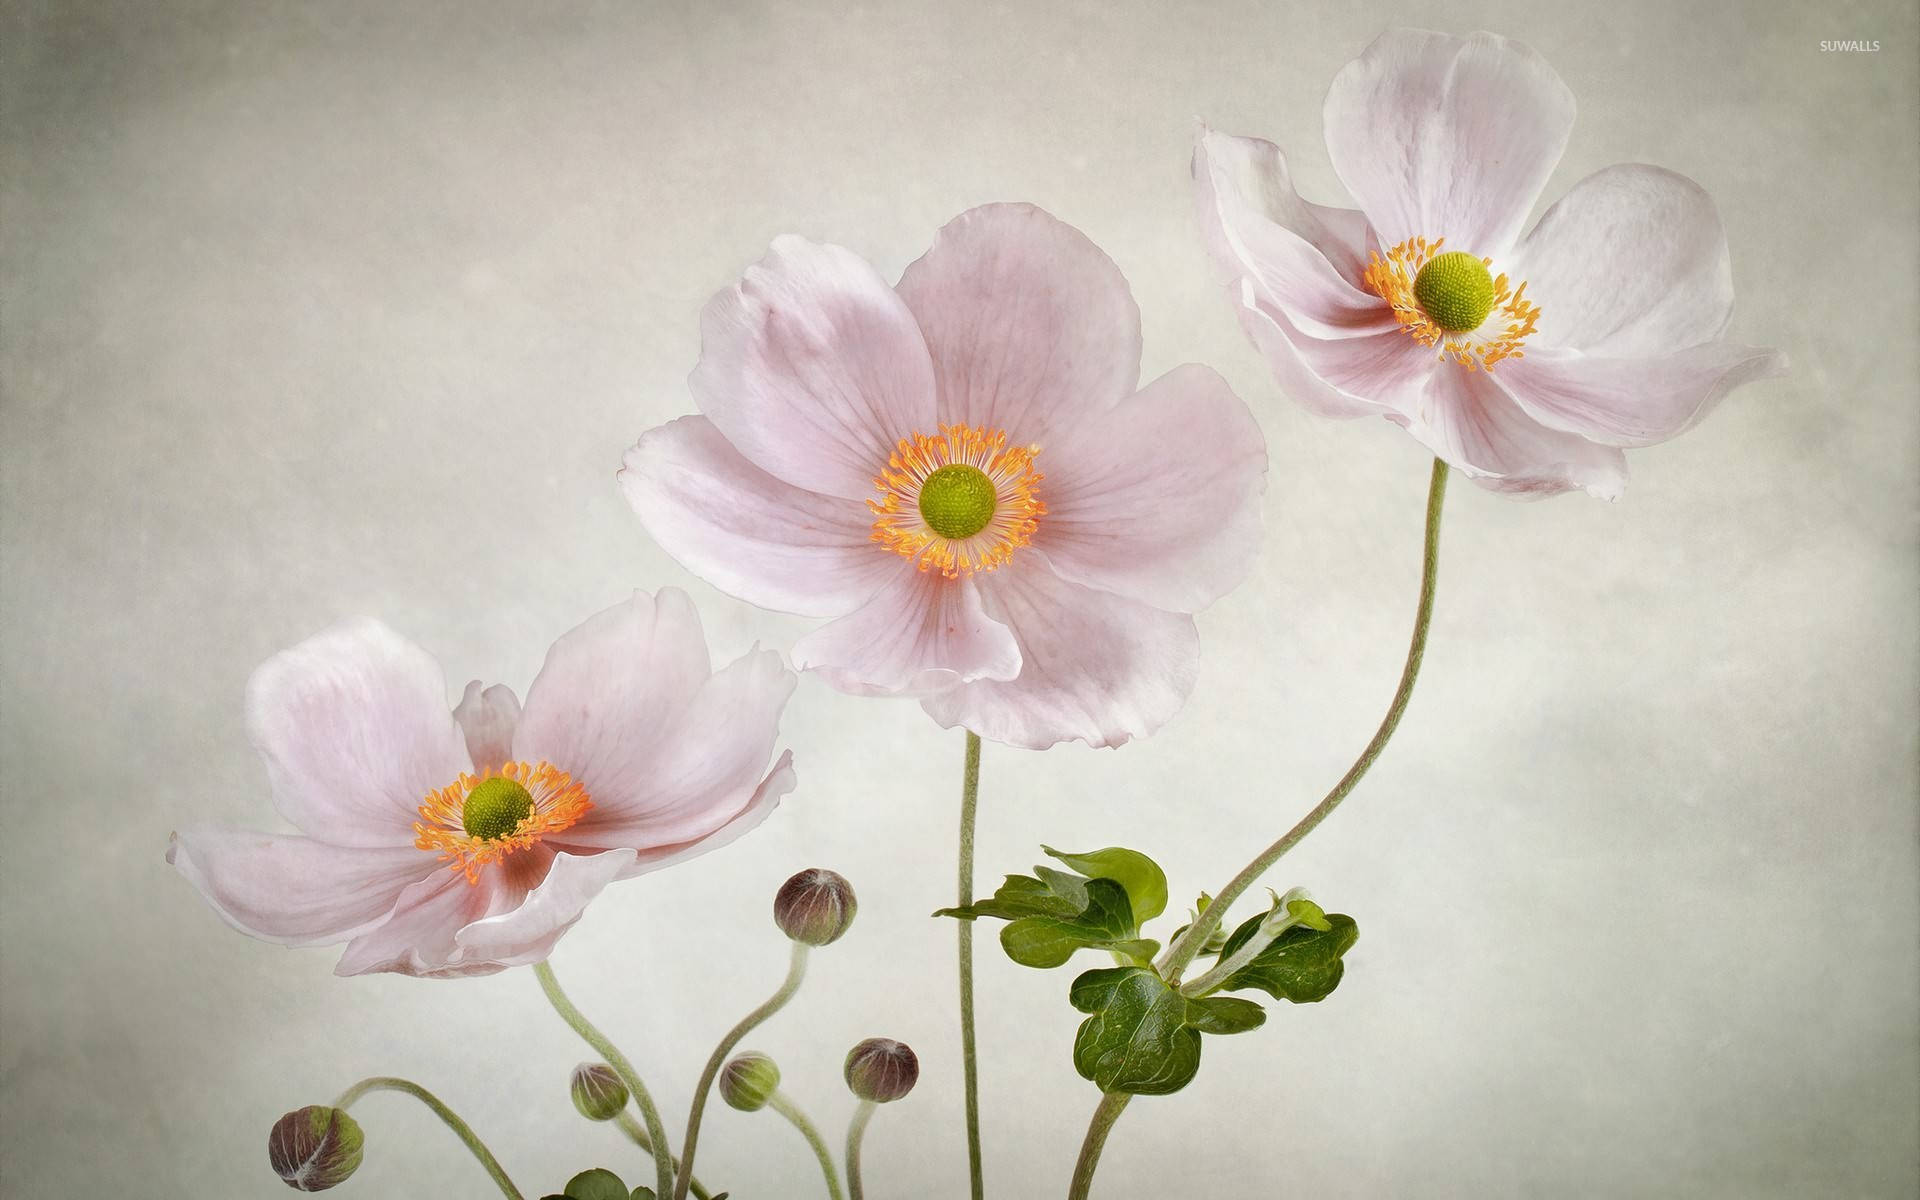 Free Anemone Flower Wallpaper Downloads, [100+] Anemone Flower Wallpapers  for FREE 